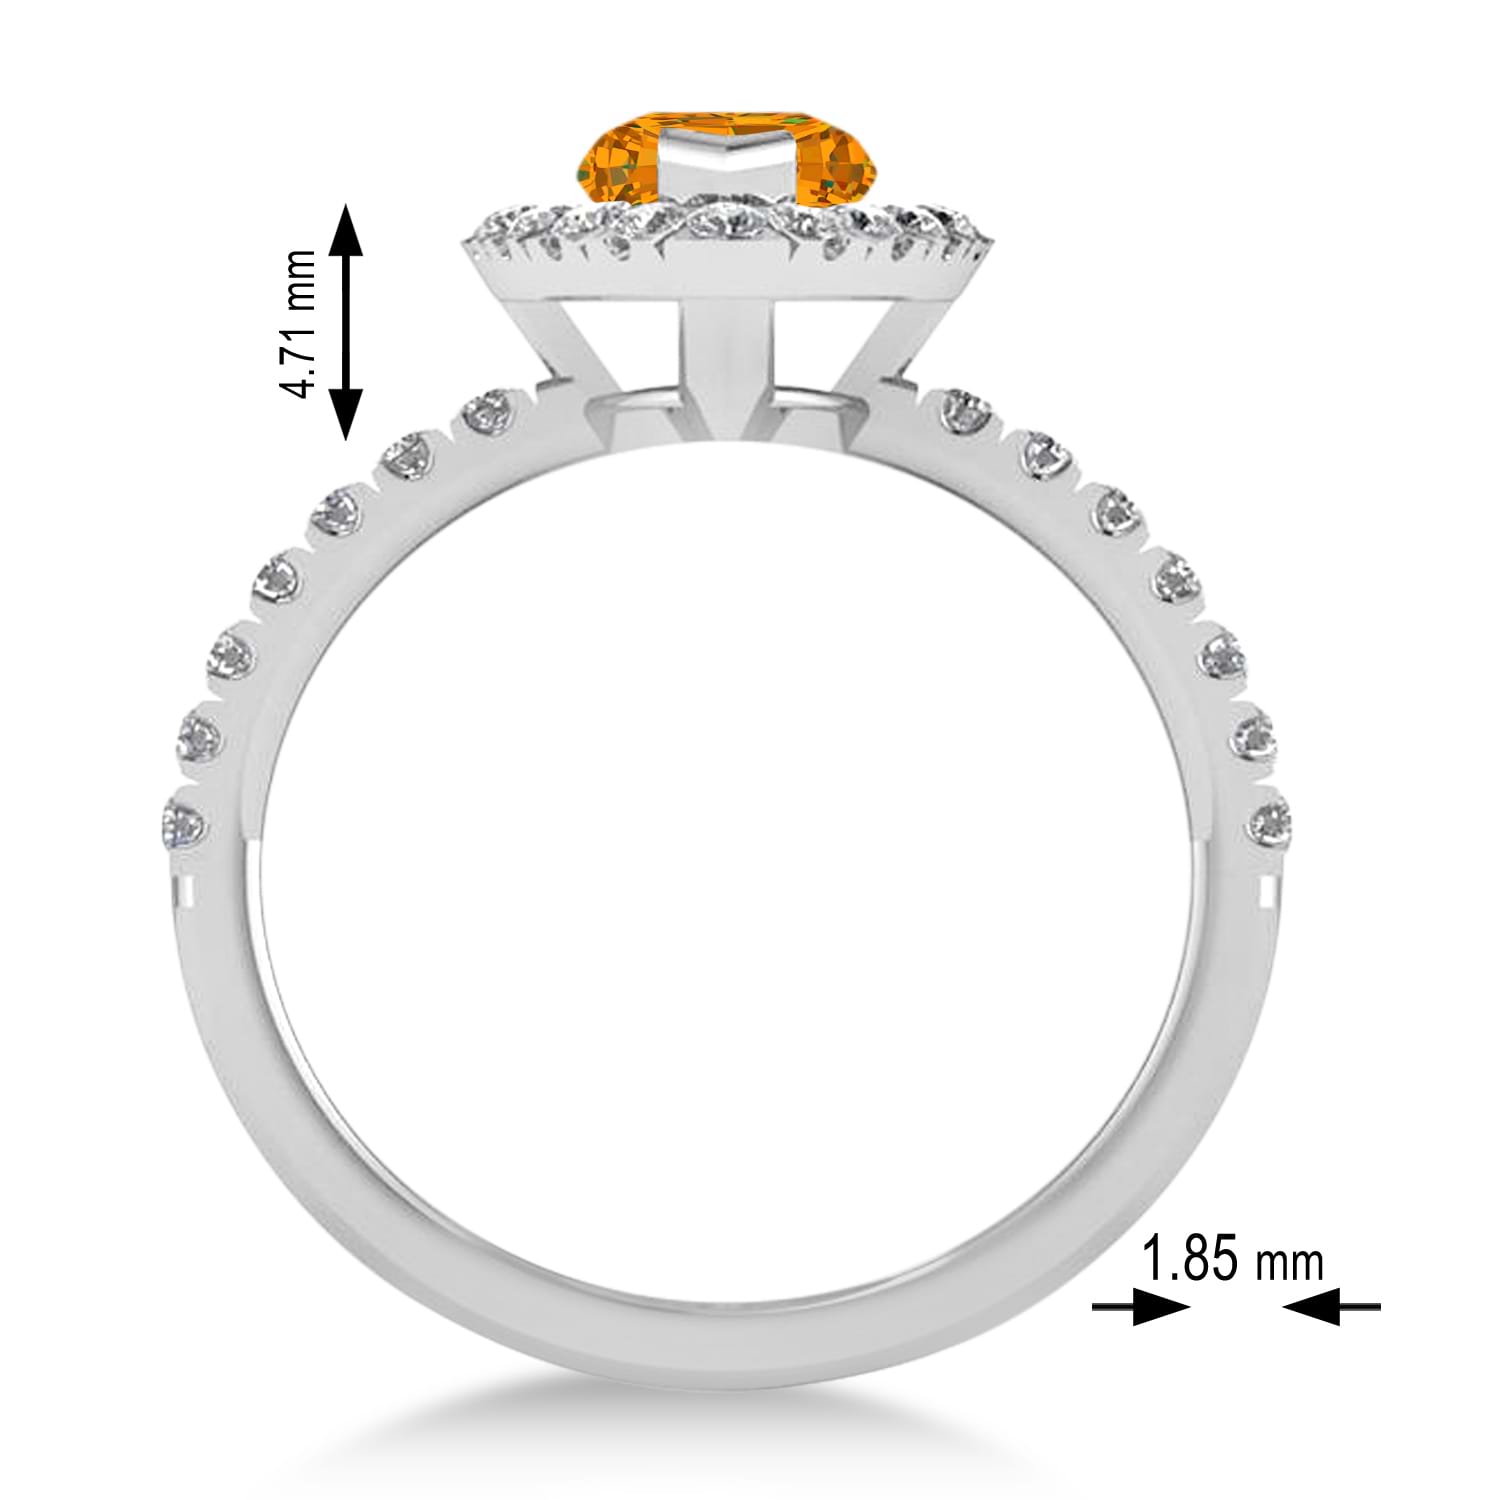 Citrine & Diamond Marquise Halo Engagement Ring 14k White Gold (1.84ct)